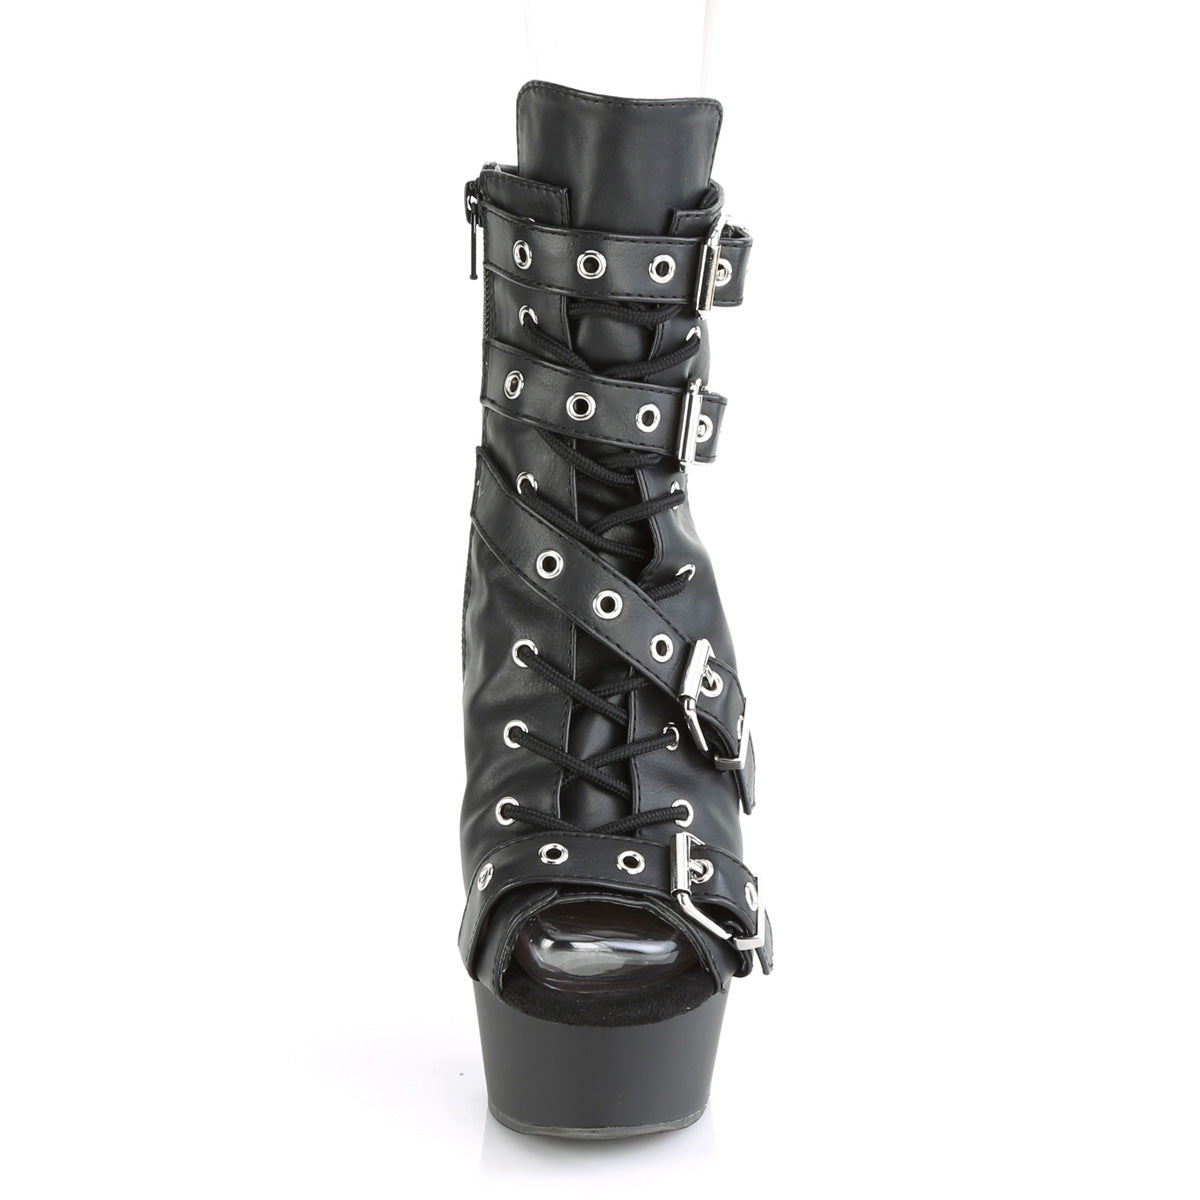 DELIGHT-600-19 Black Ankle Peep Toe Boots